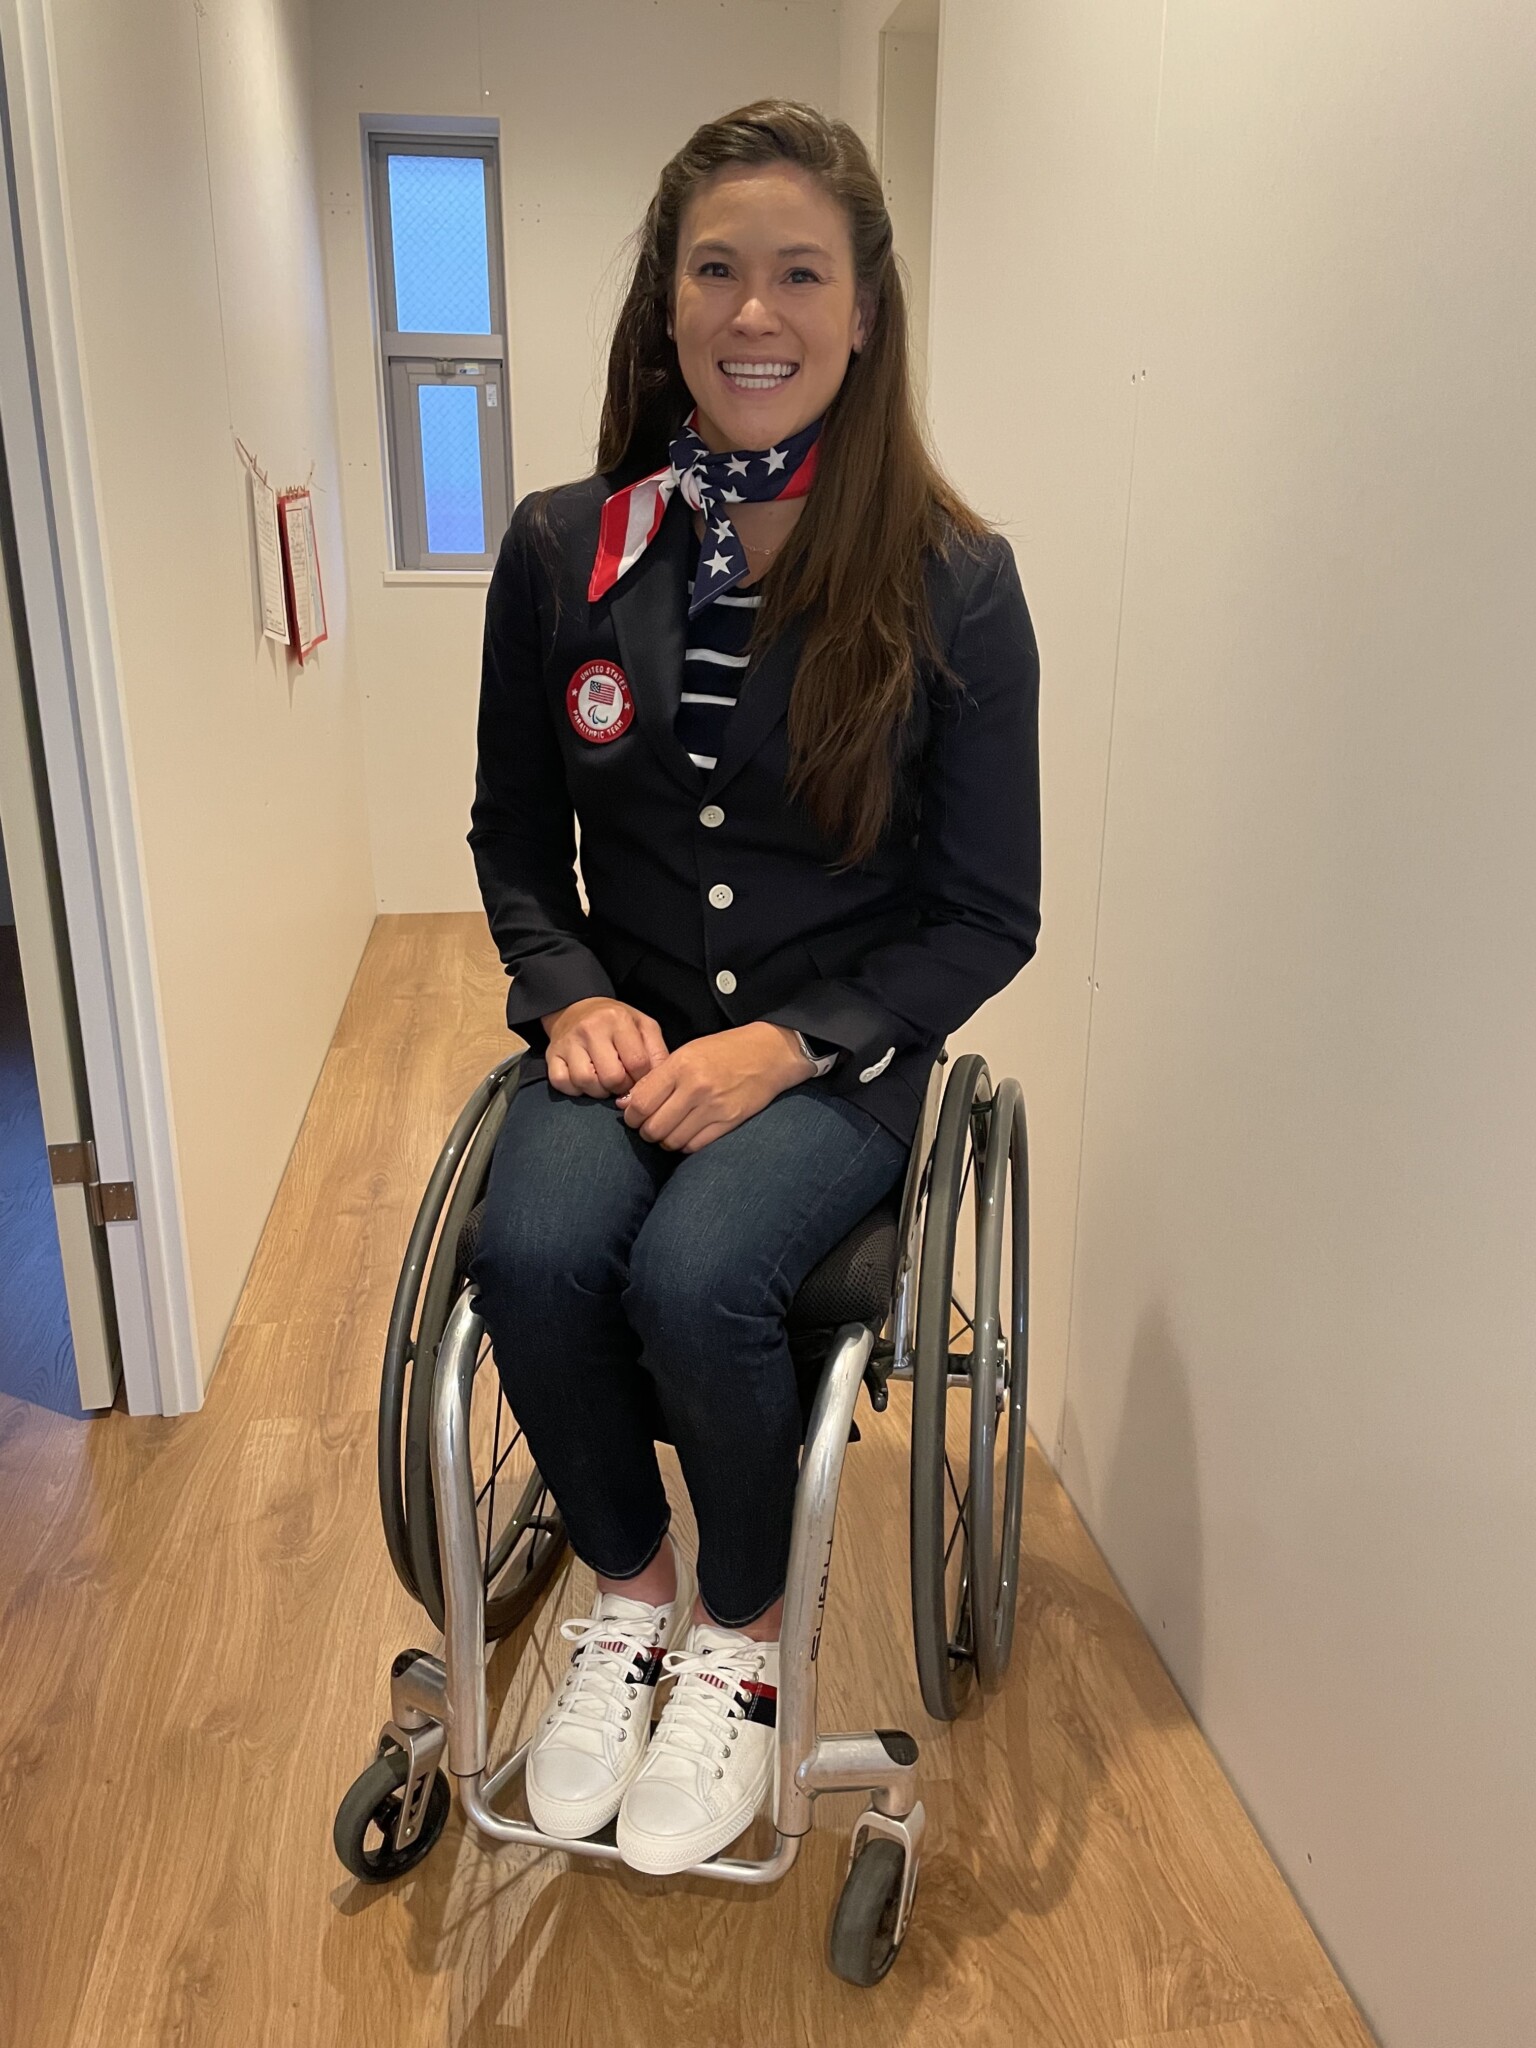 Wheelchair tennis player Dana Mathewson sits in a hallway in a Team USA uniform.